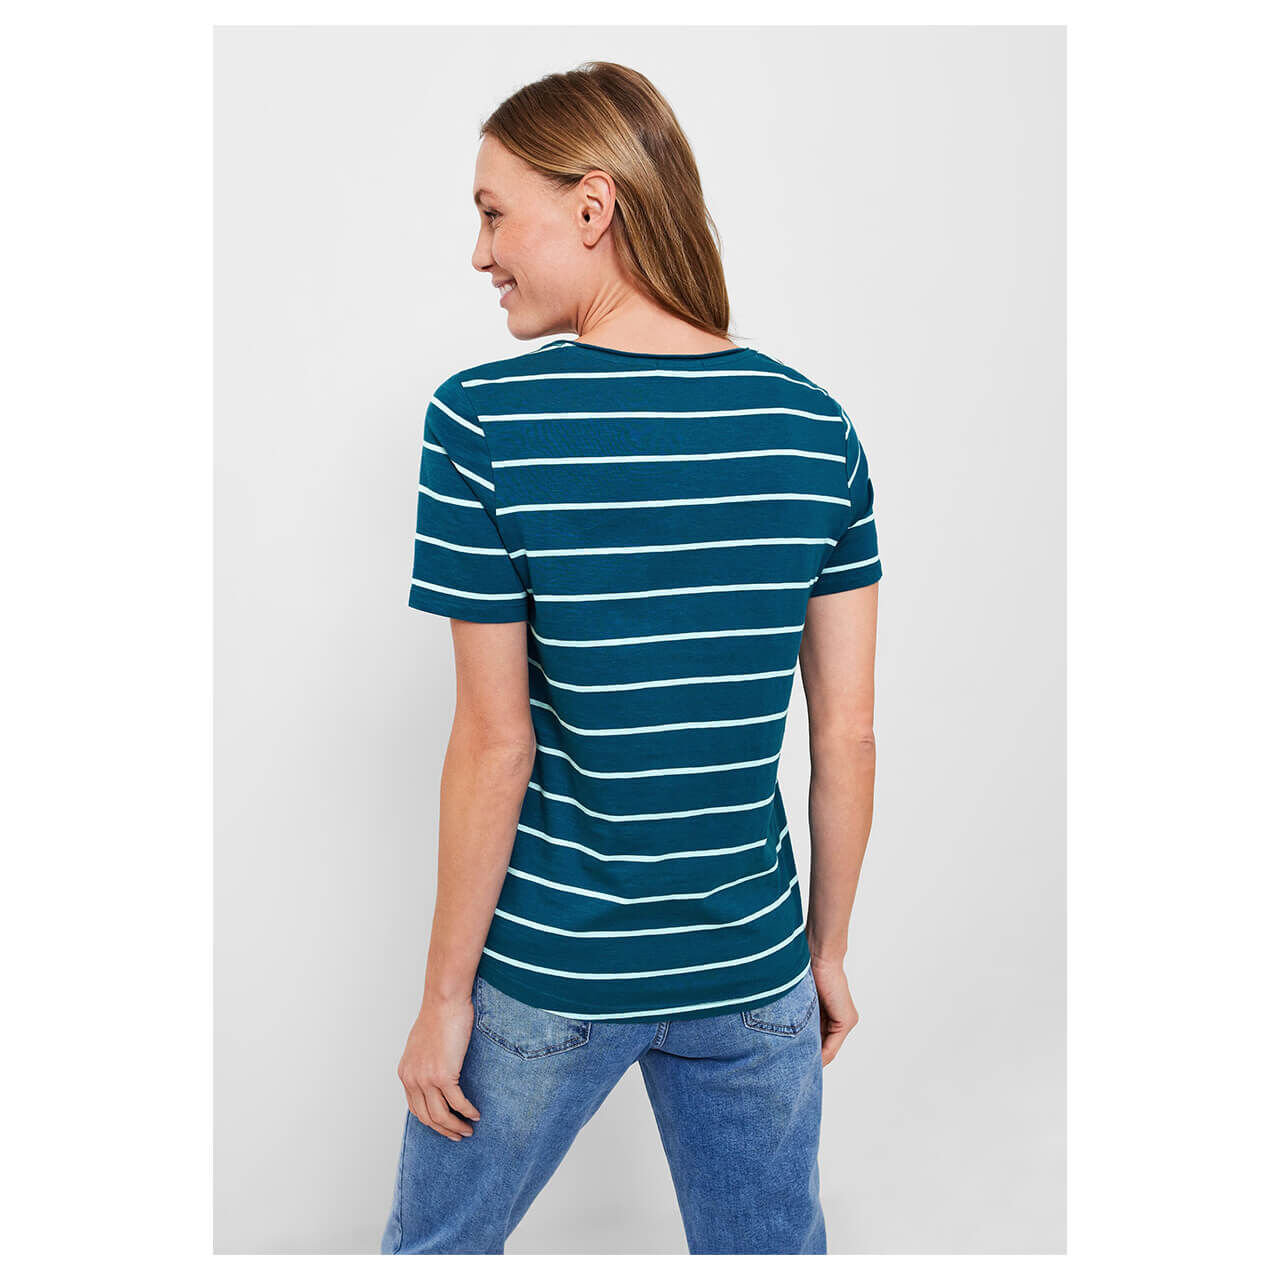 Cecil Stripe Rounded V-Neck T-Shirt teal blue stripes